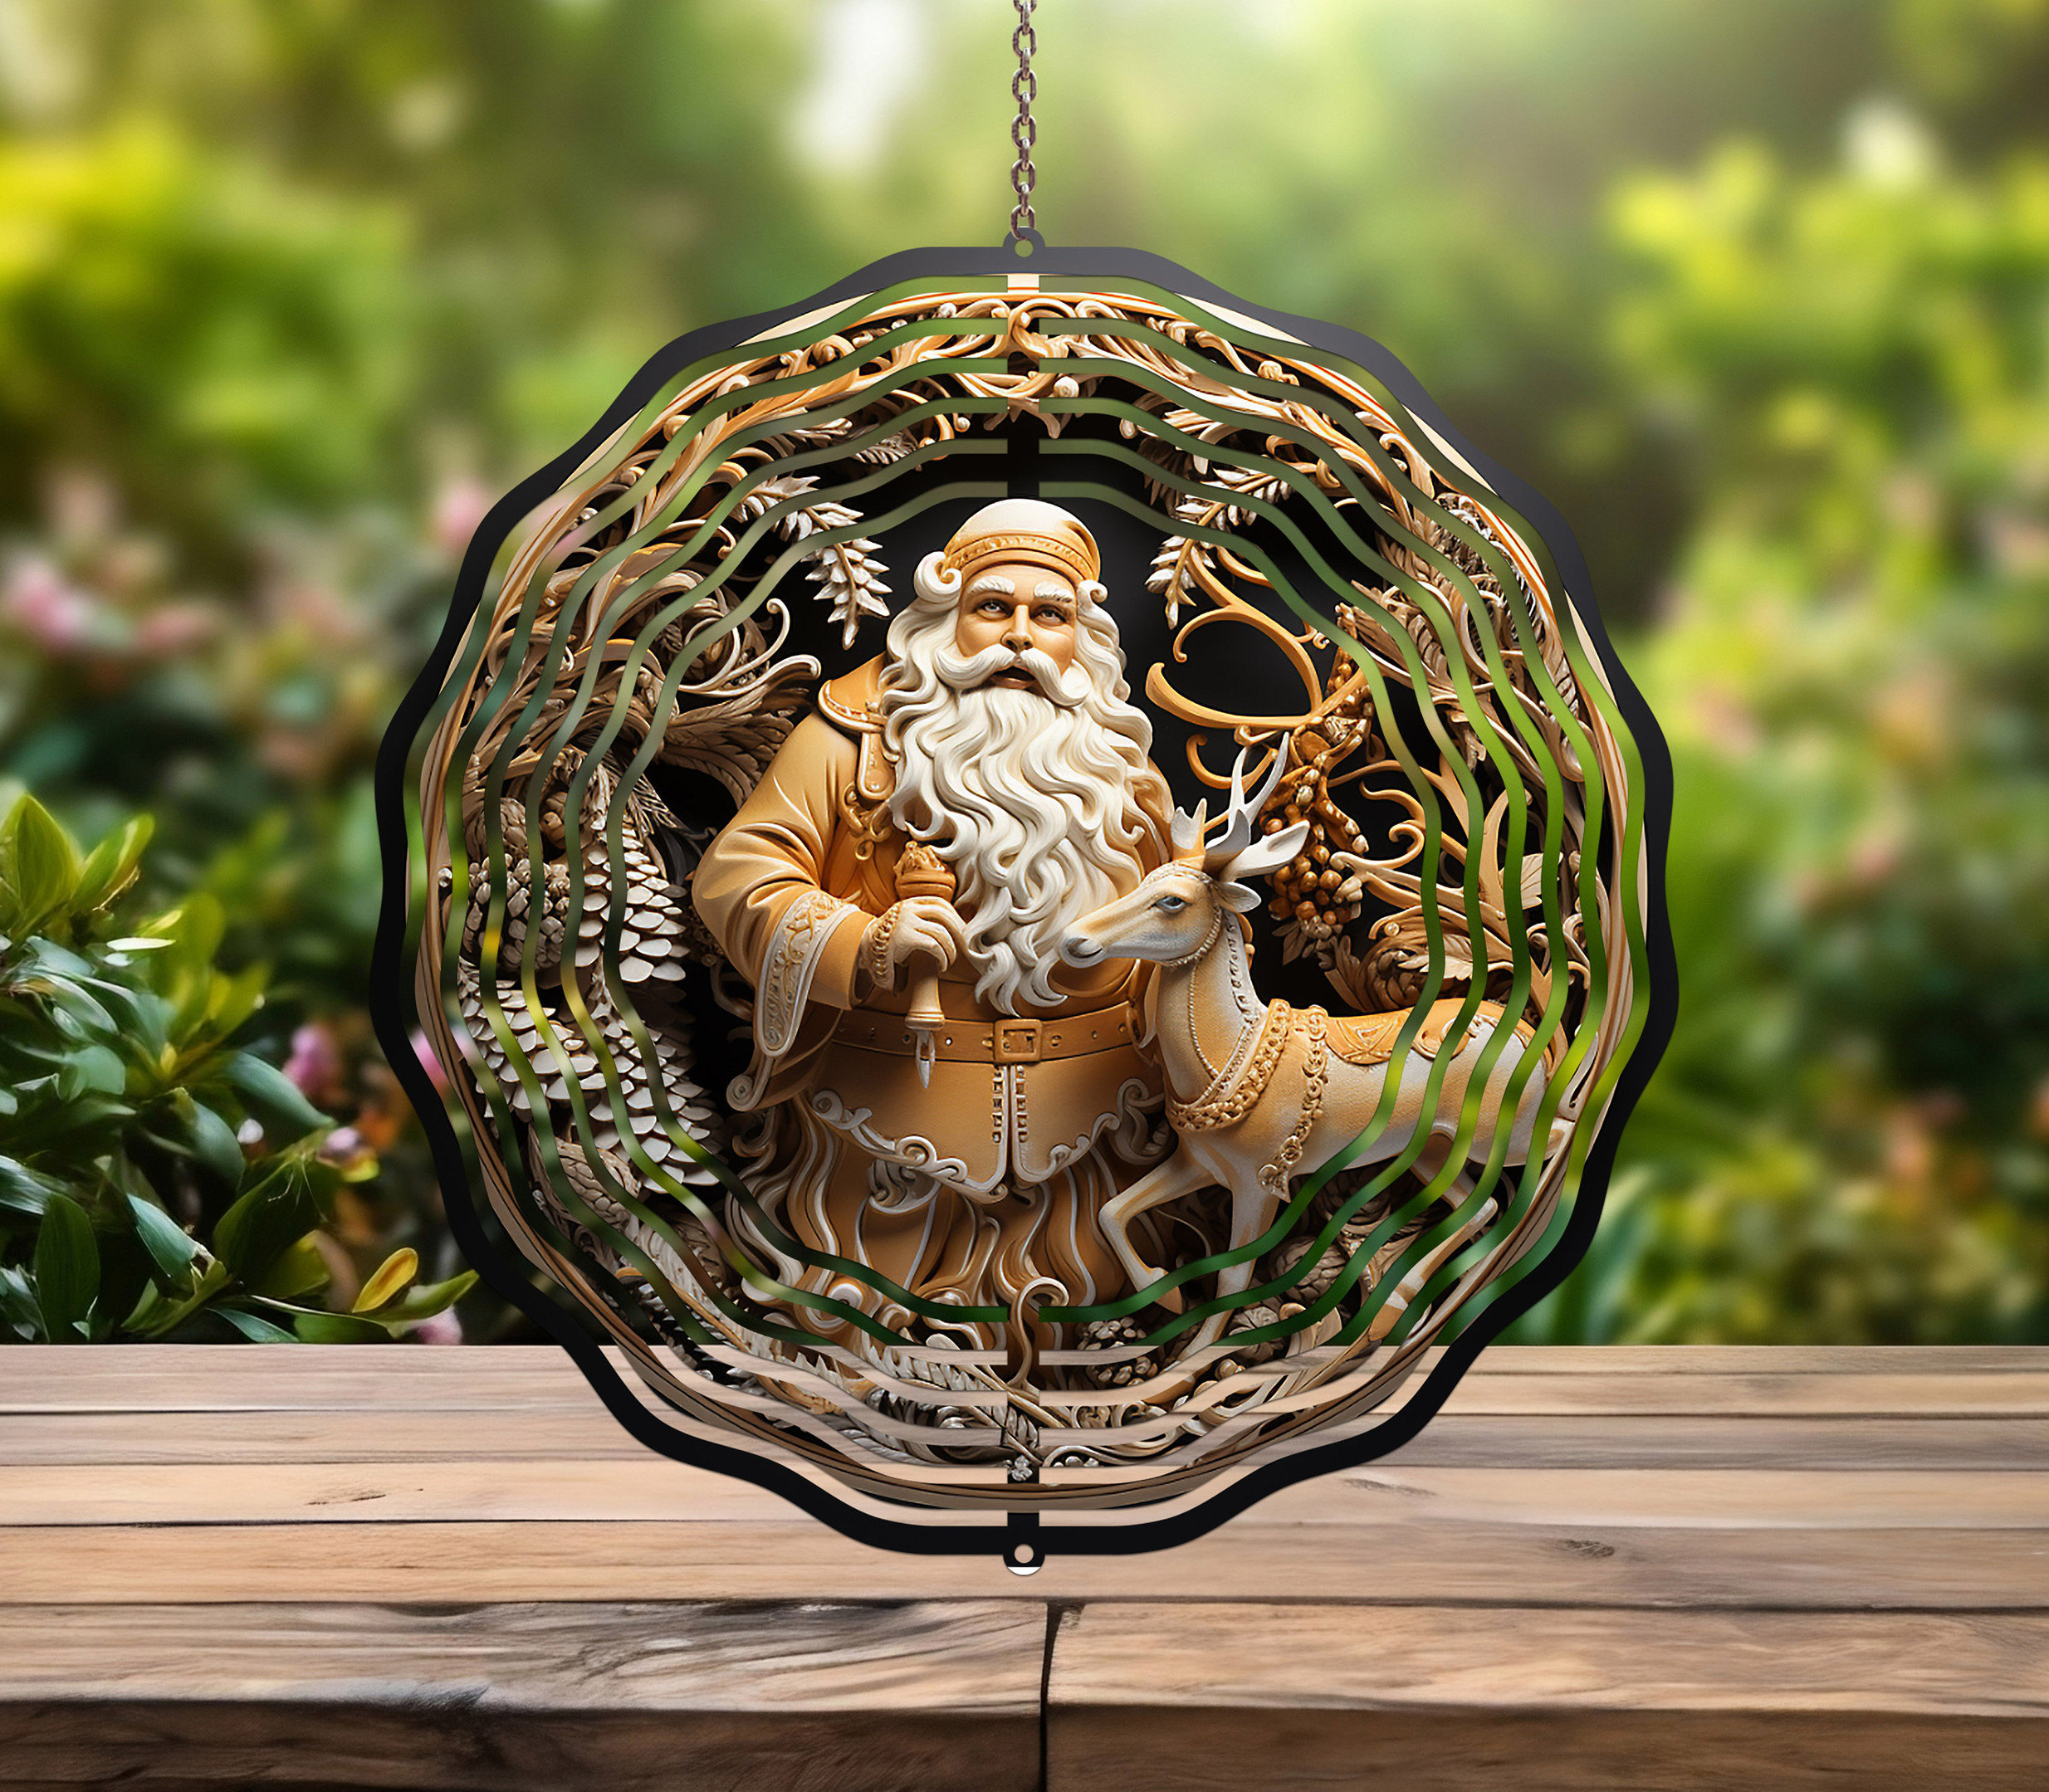 3D Santa Claus Wind Spinner For Yard And Garden, Outdoor Garden Yard Decoration, Garden Decor, Chime Art Gift